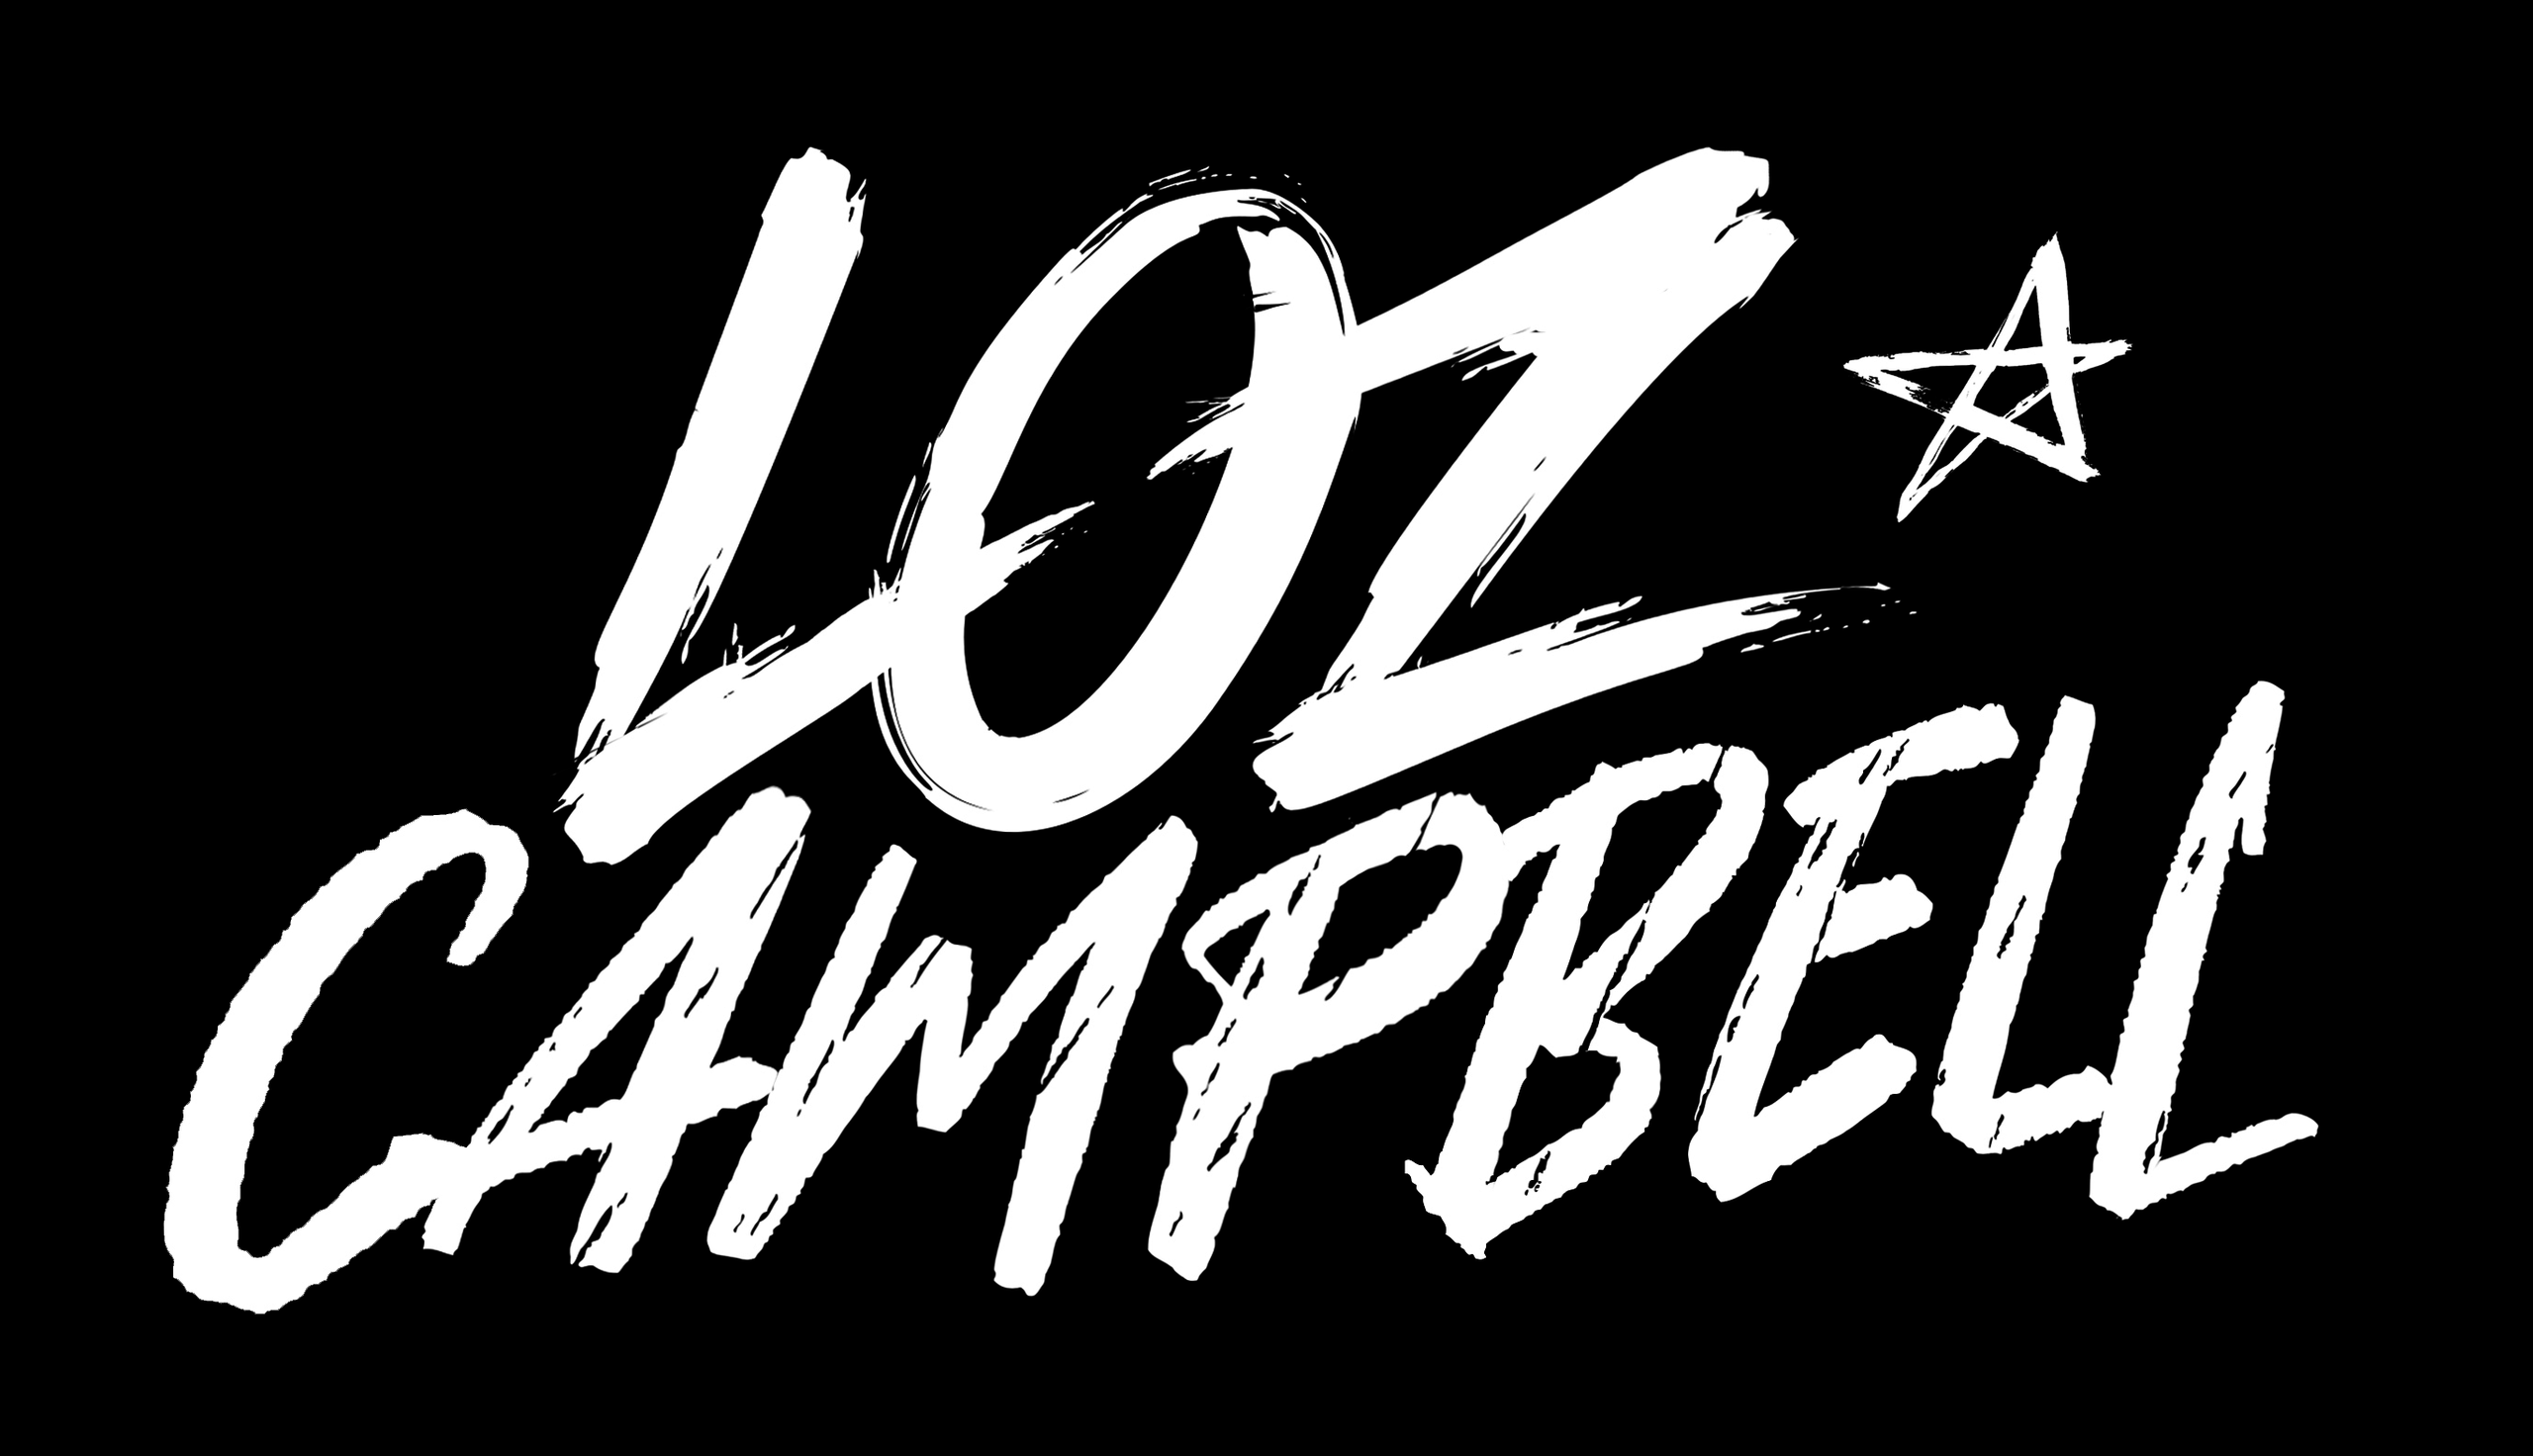 LOZ CAMPBELL